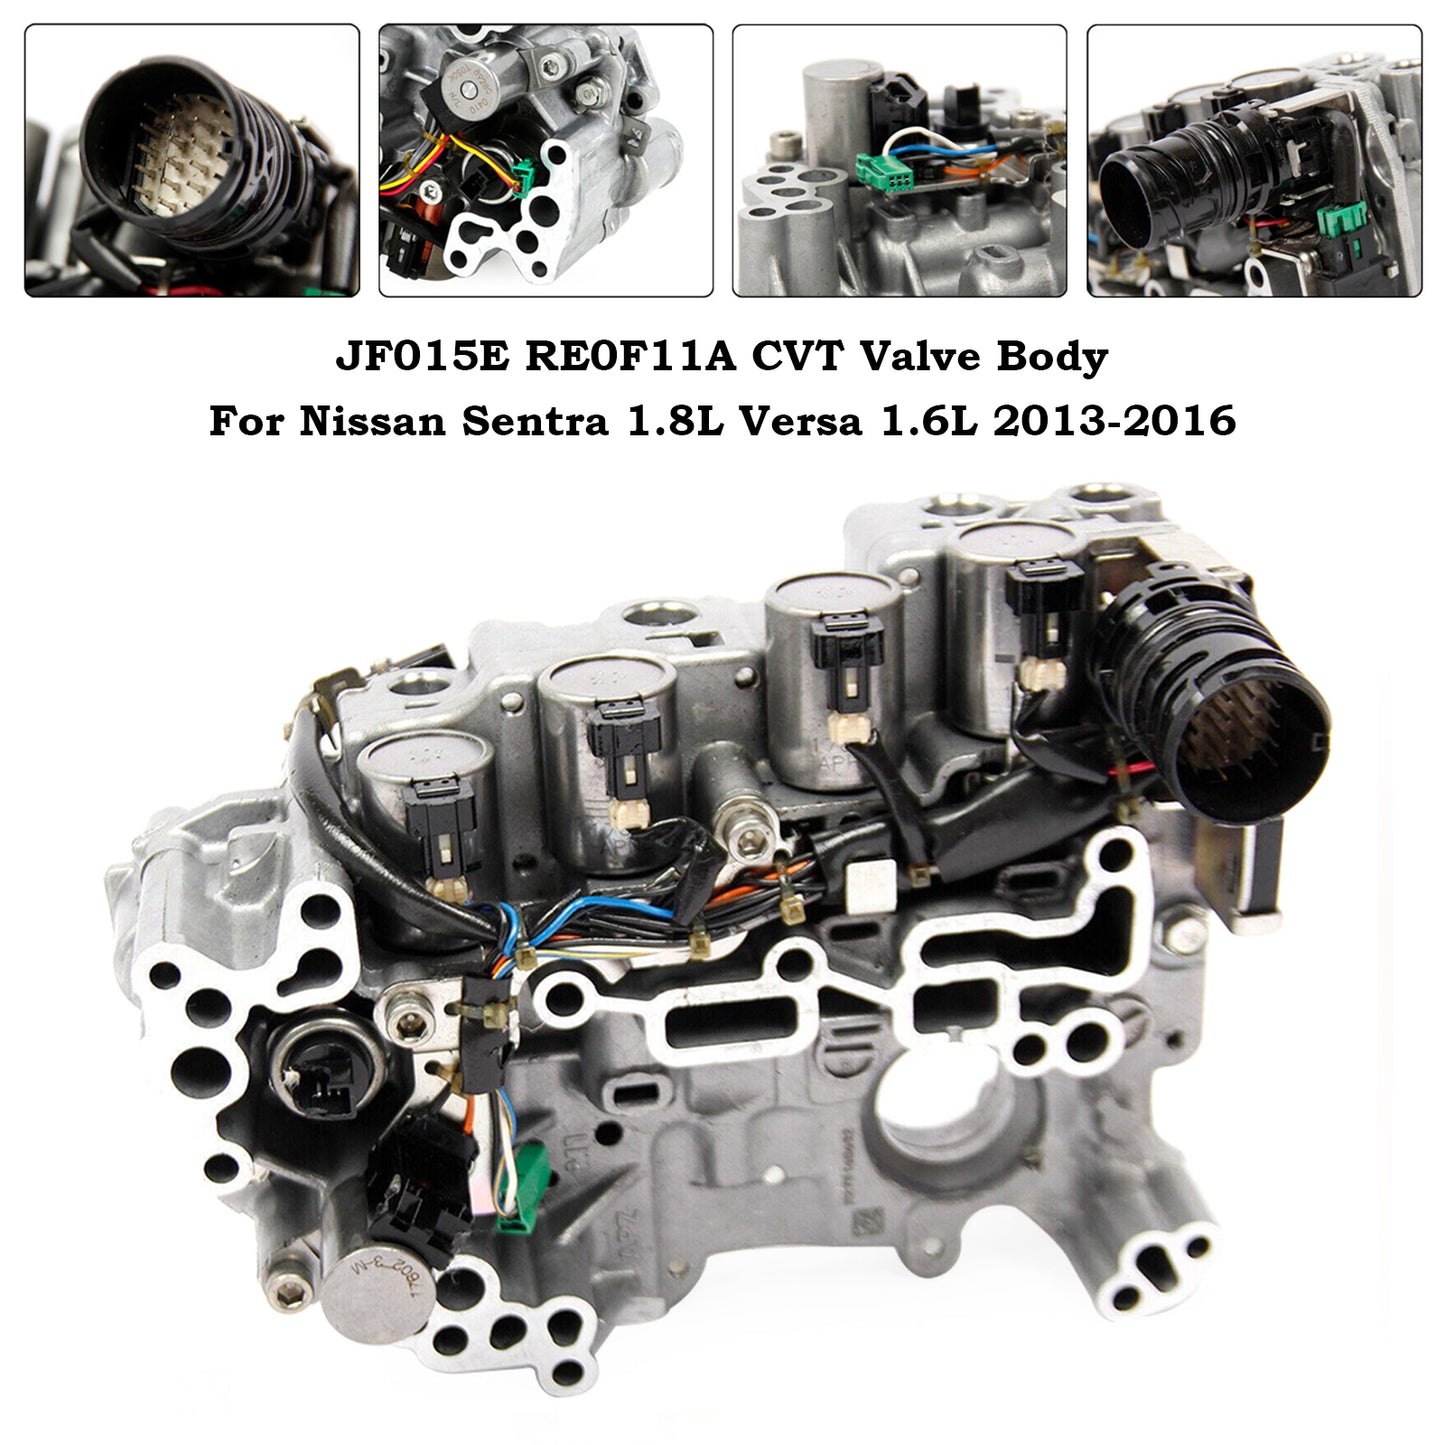 JF015E RE0F11A Corpo valvola CVT per Nissan Sentra 1.8L Versa 1.6L 2013-2016